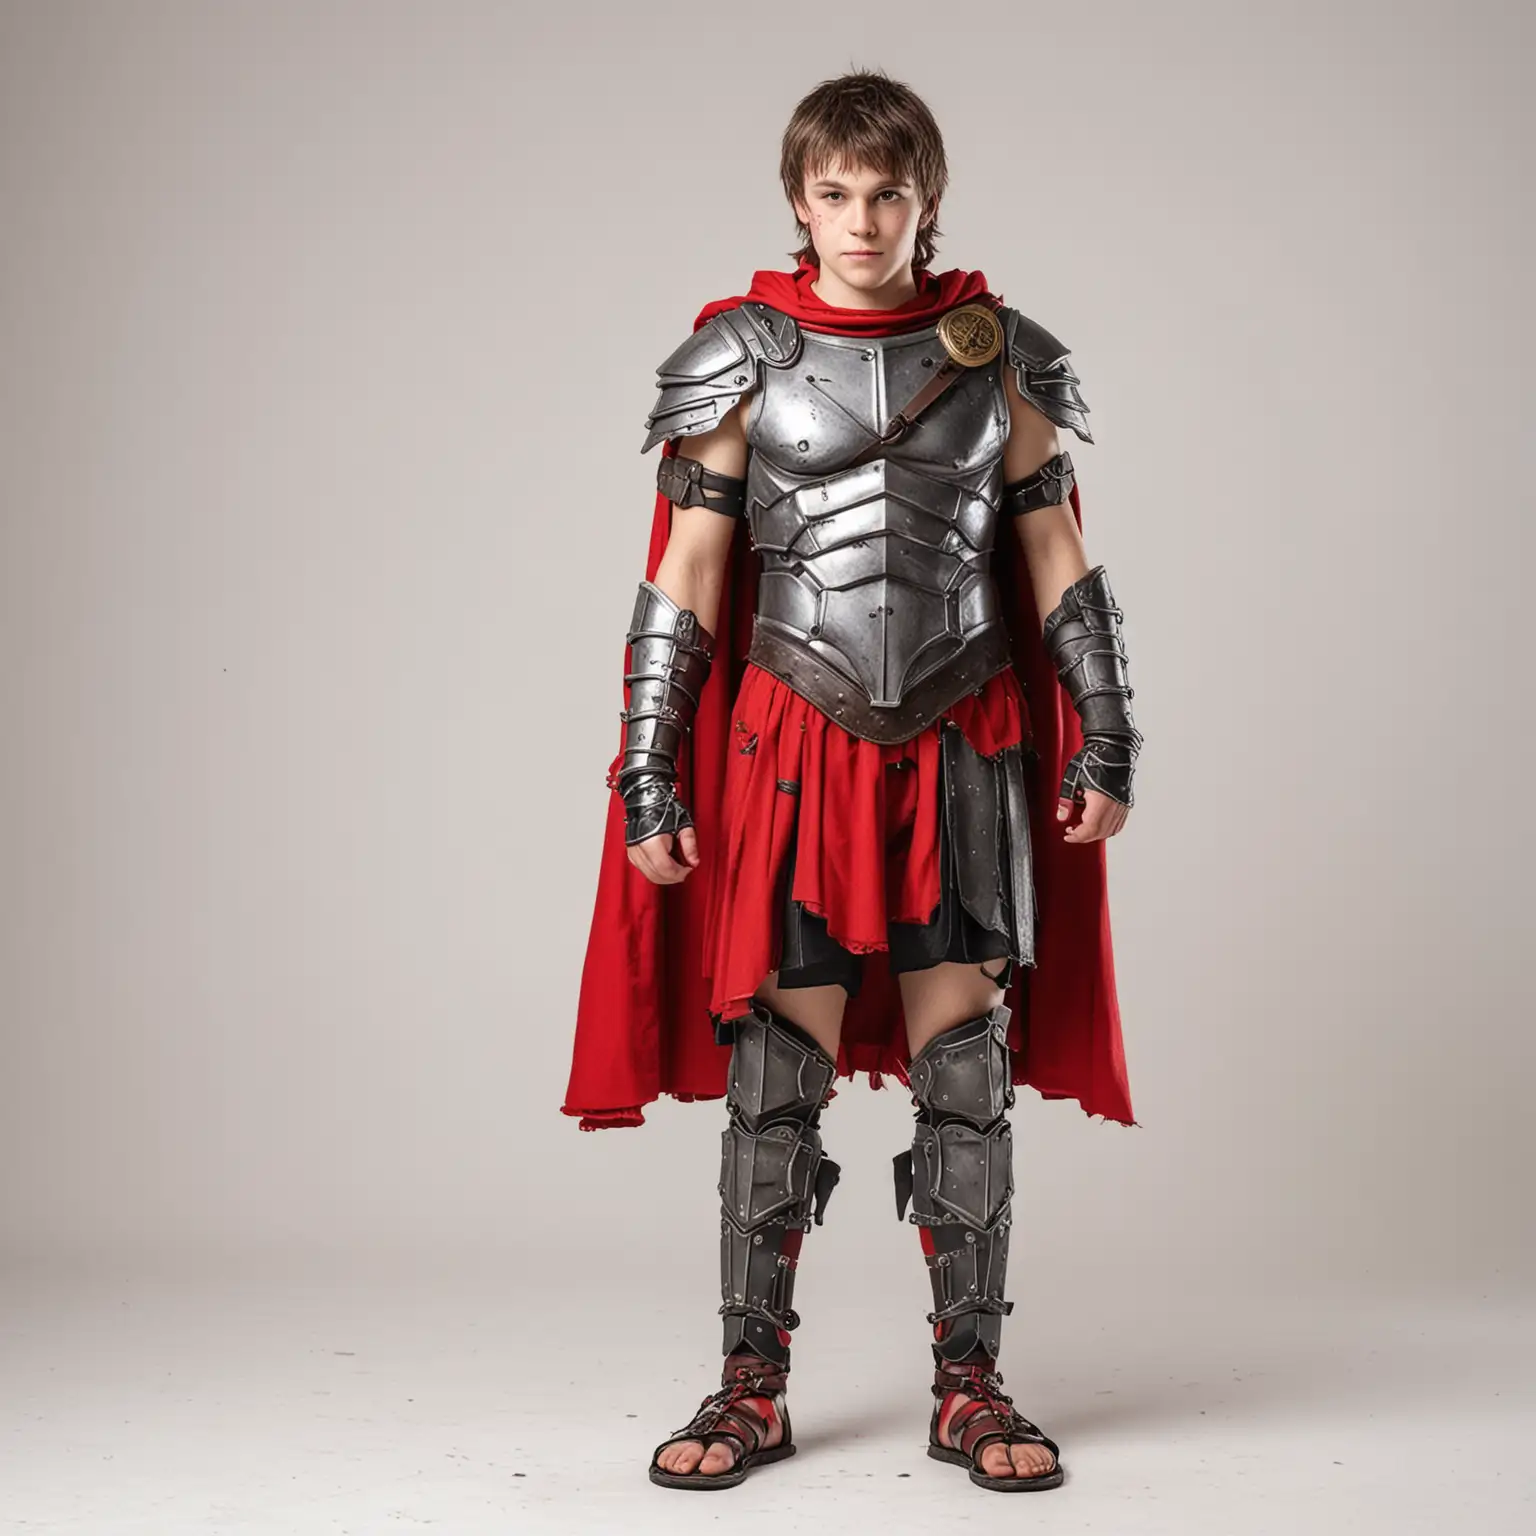 Teenage Spartan Warrior Cosplayer in Red Cloak on White Background